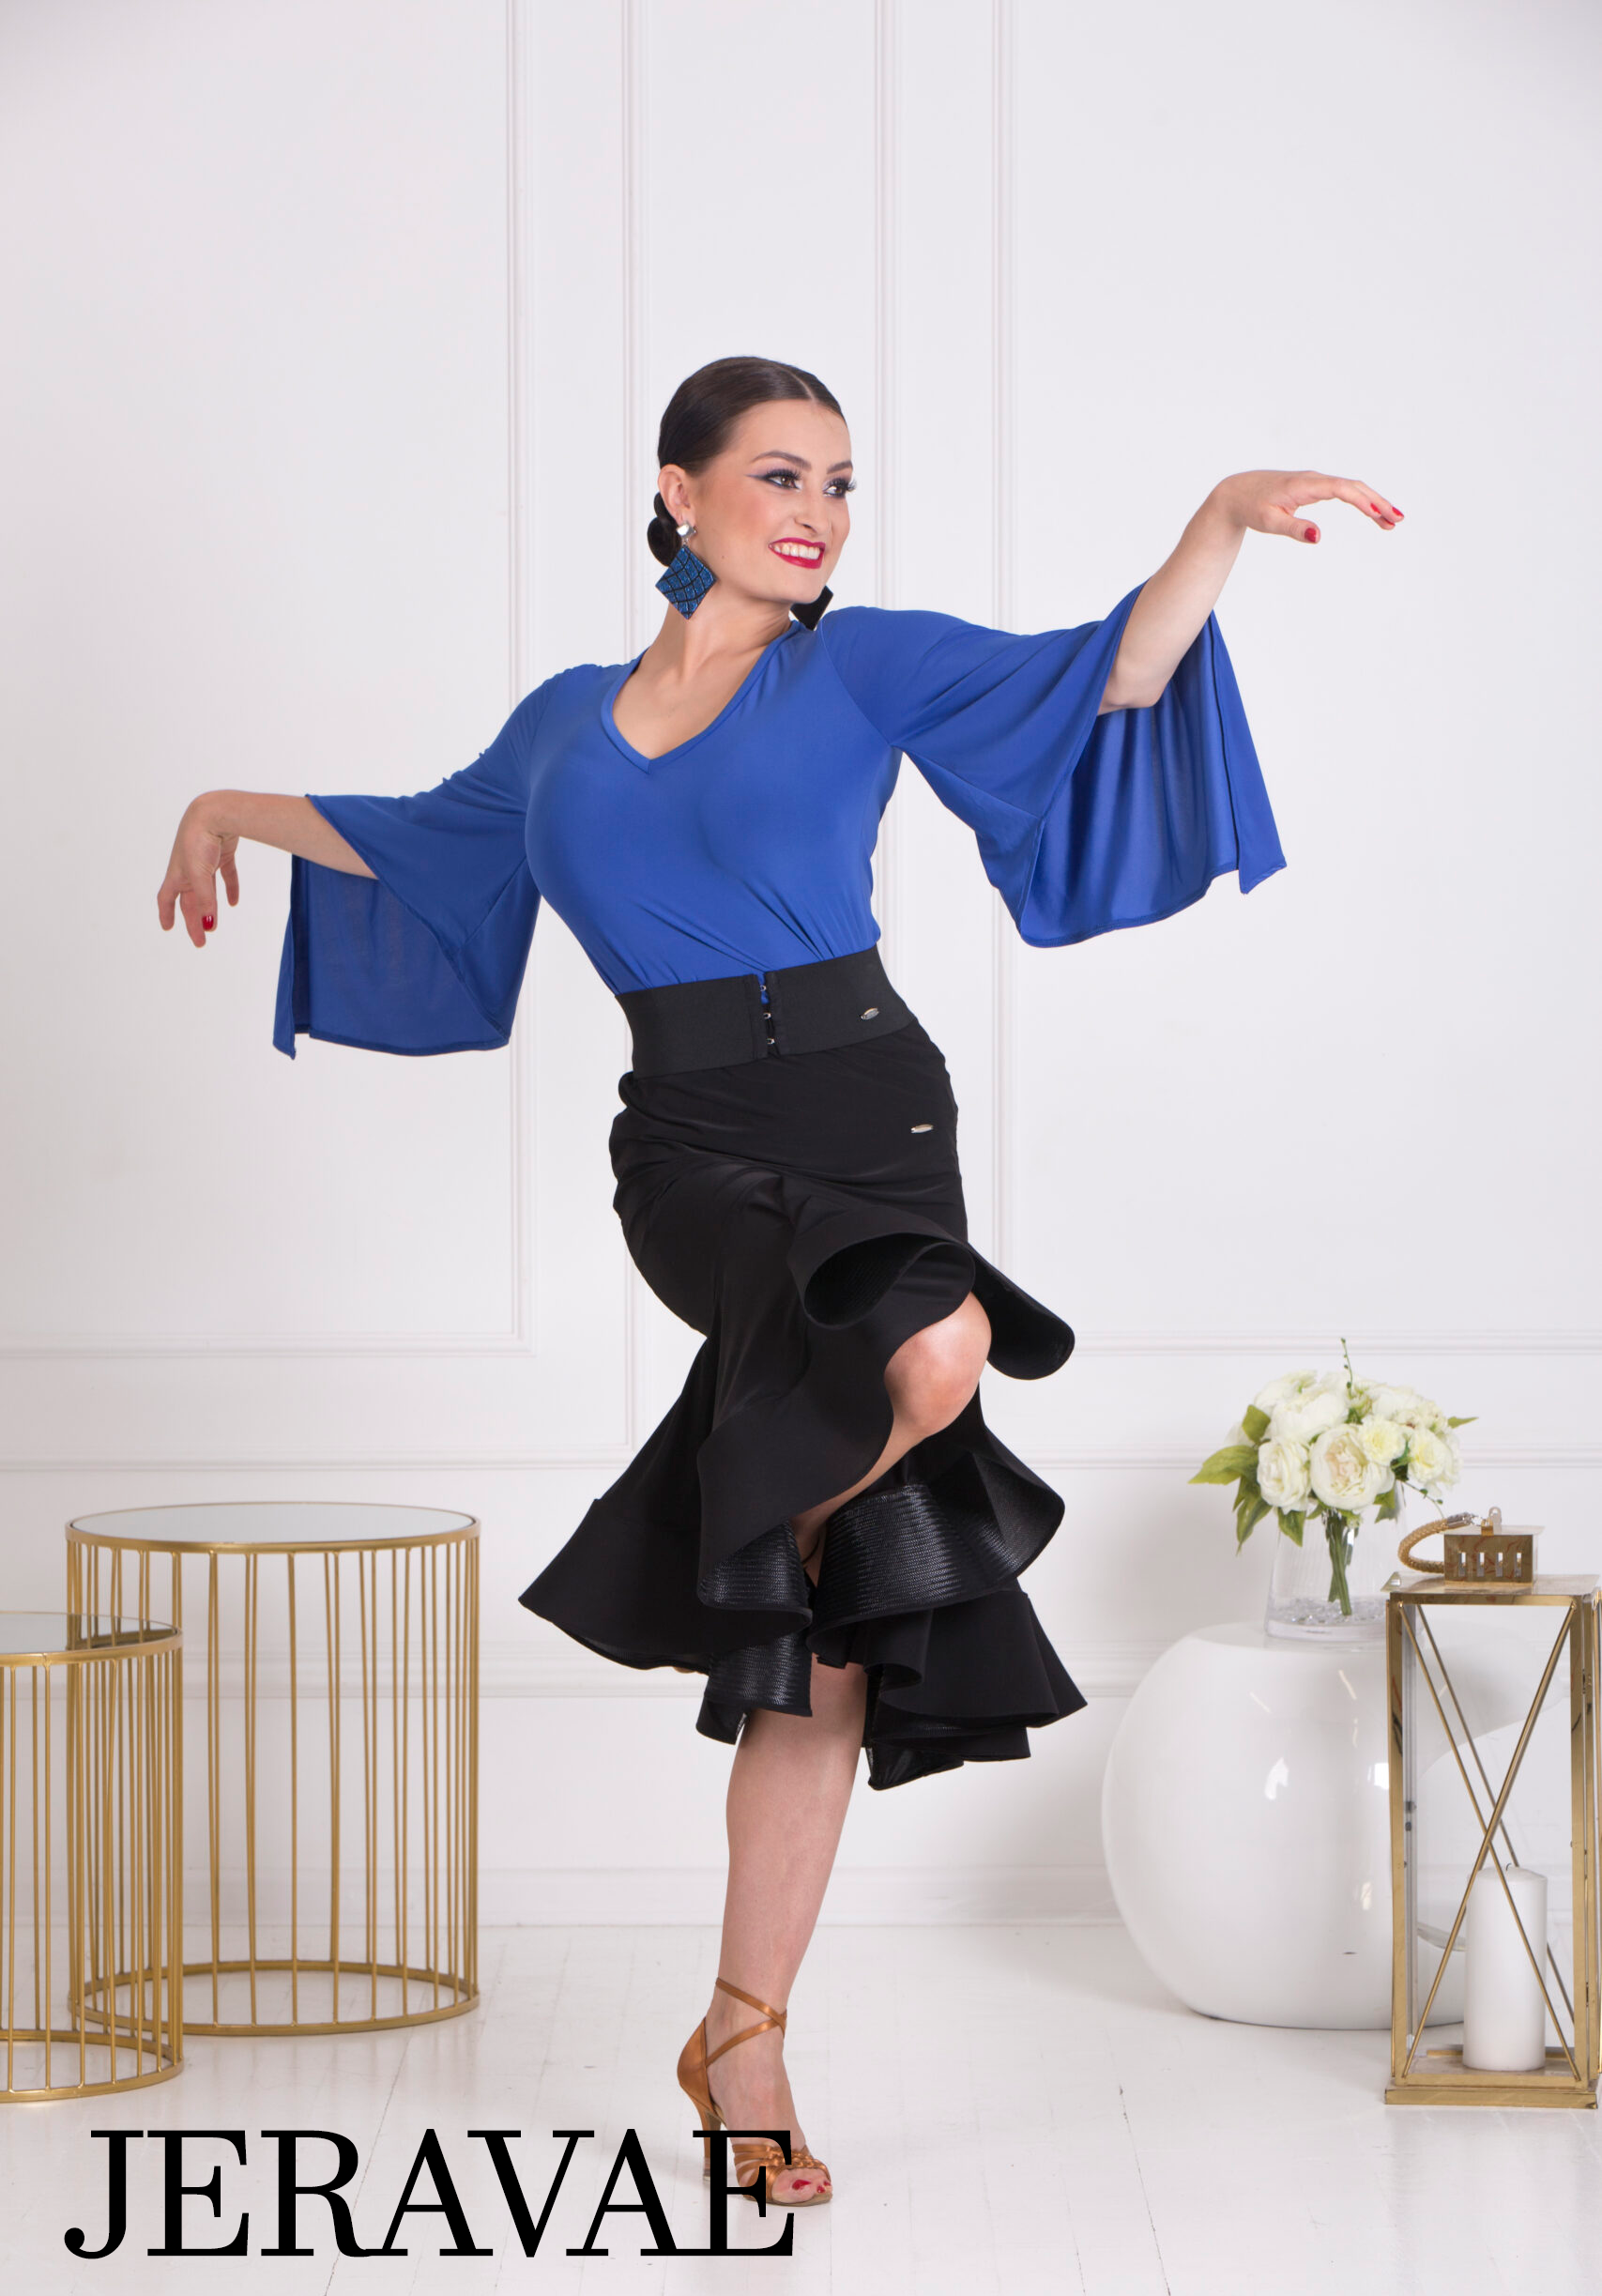 Blue top and black skirt for women's Latin dance